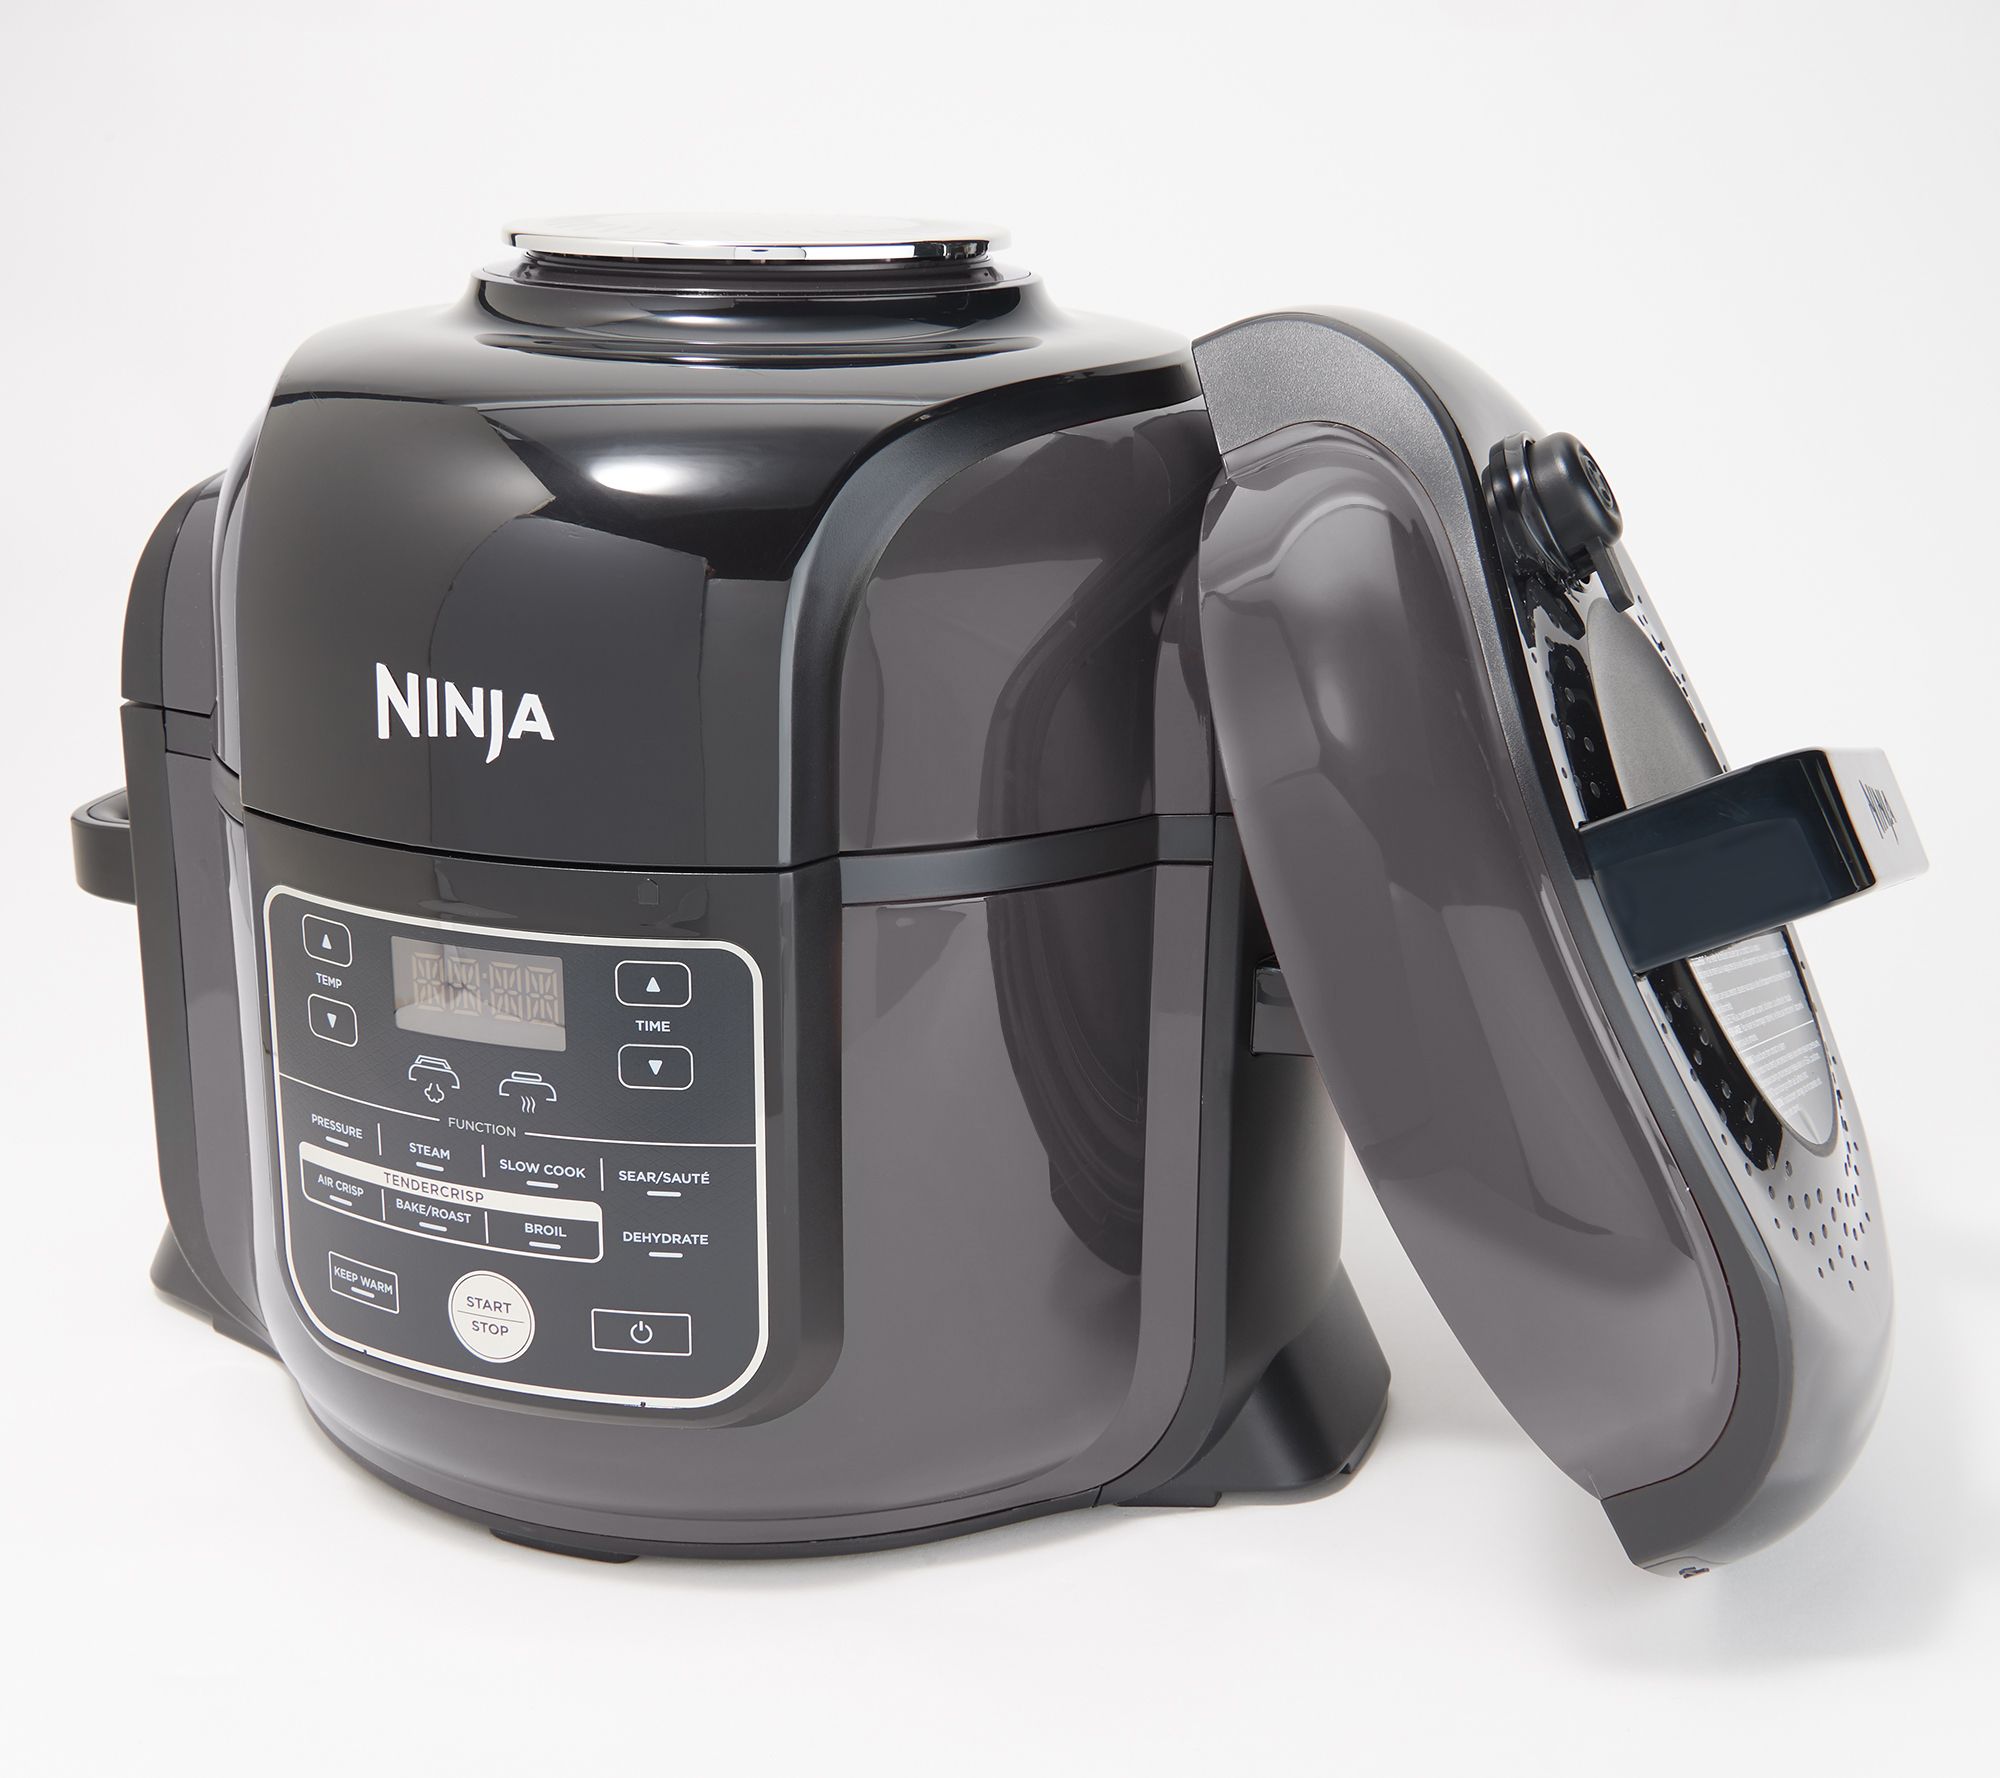 Ninja Foodi 6 5 Qt 8 In 1 Pressure Cooker W Tendercrisp Technology Qvc Com